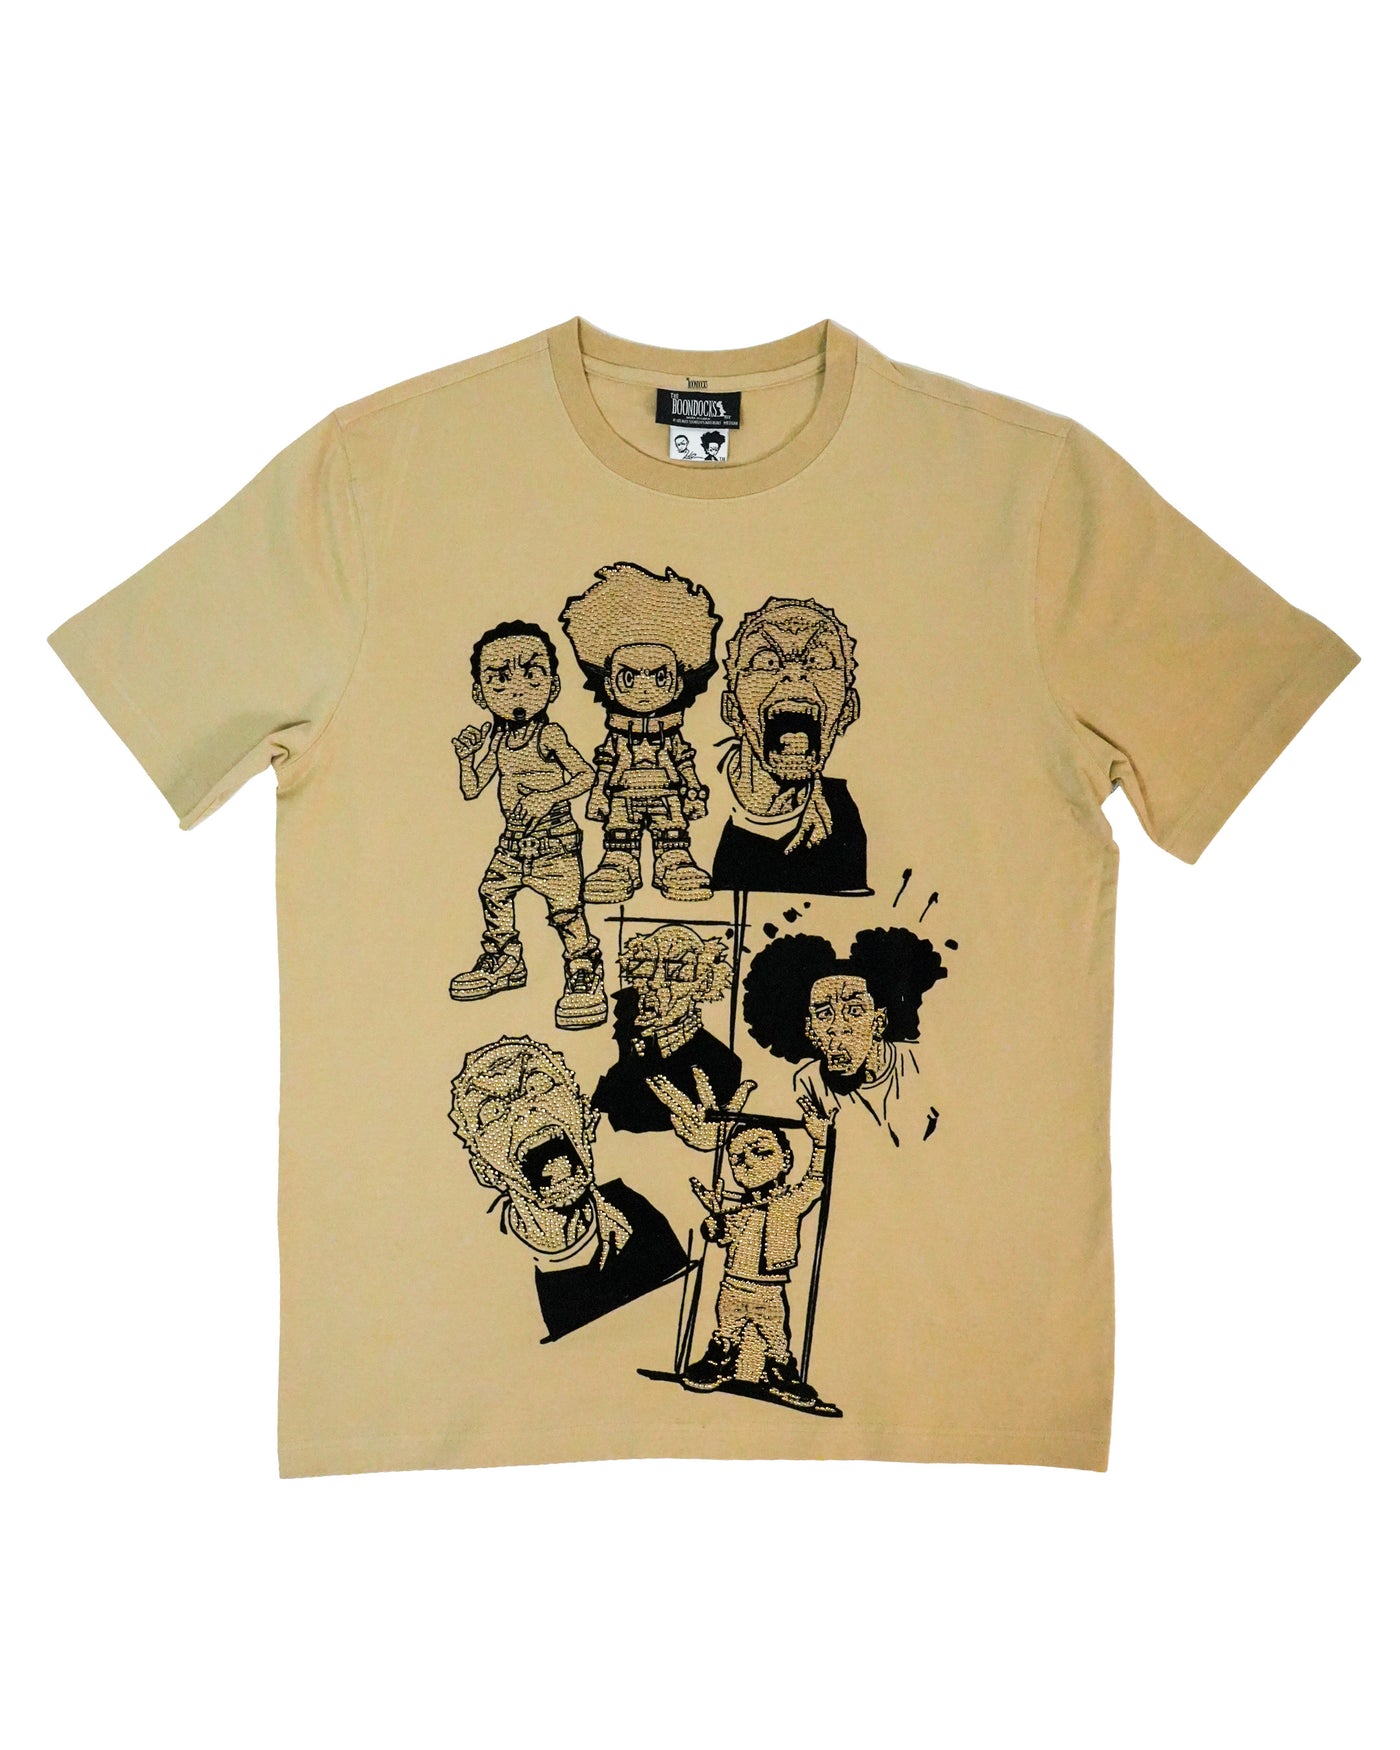 The Boondocks -Boondocks Family Rhinestoned Tan T-Shirt